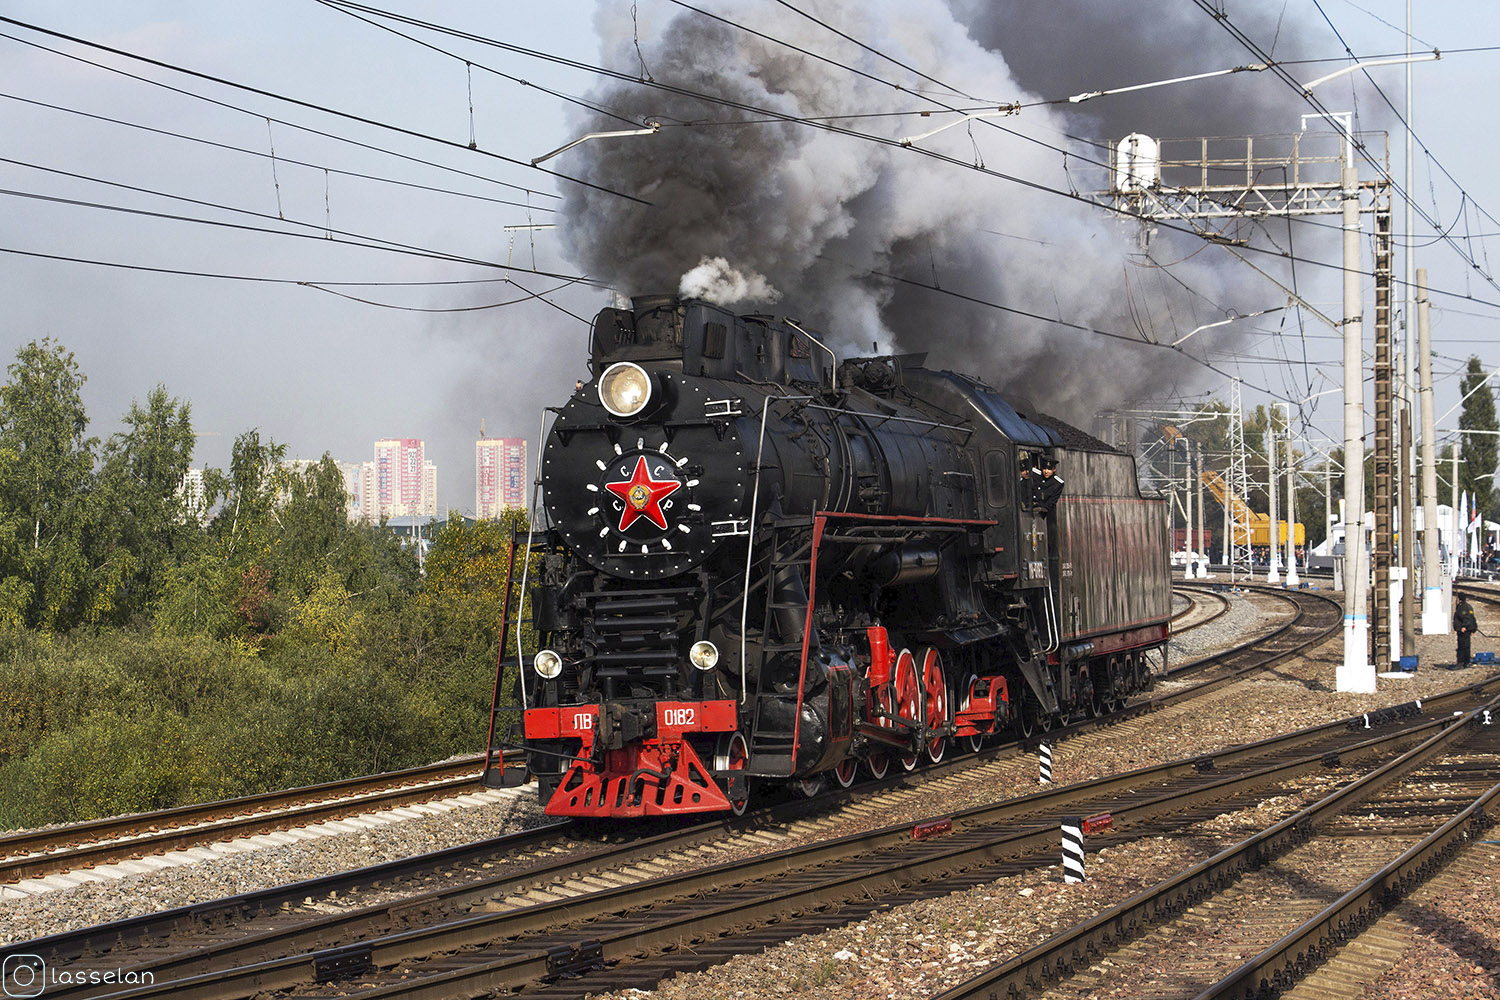 ЛВ-0182; Moscow Railway — The 4th International Rail Salon EXPO 1520